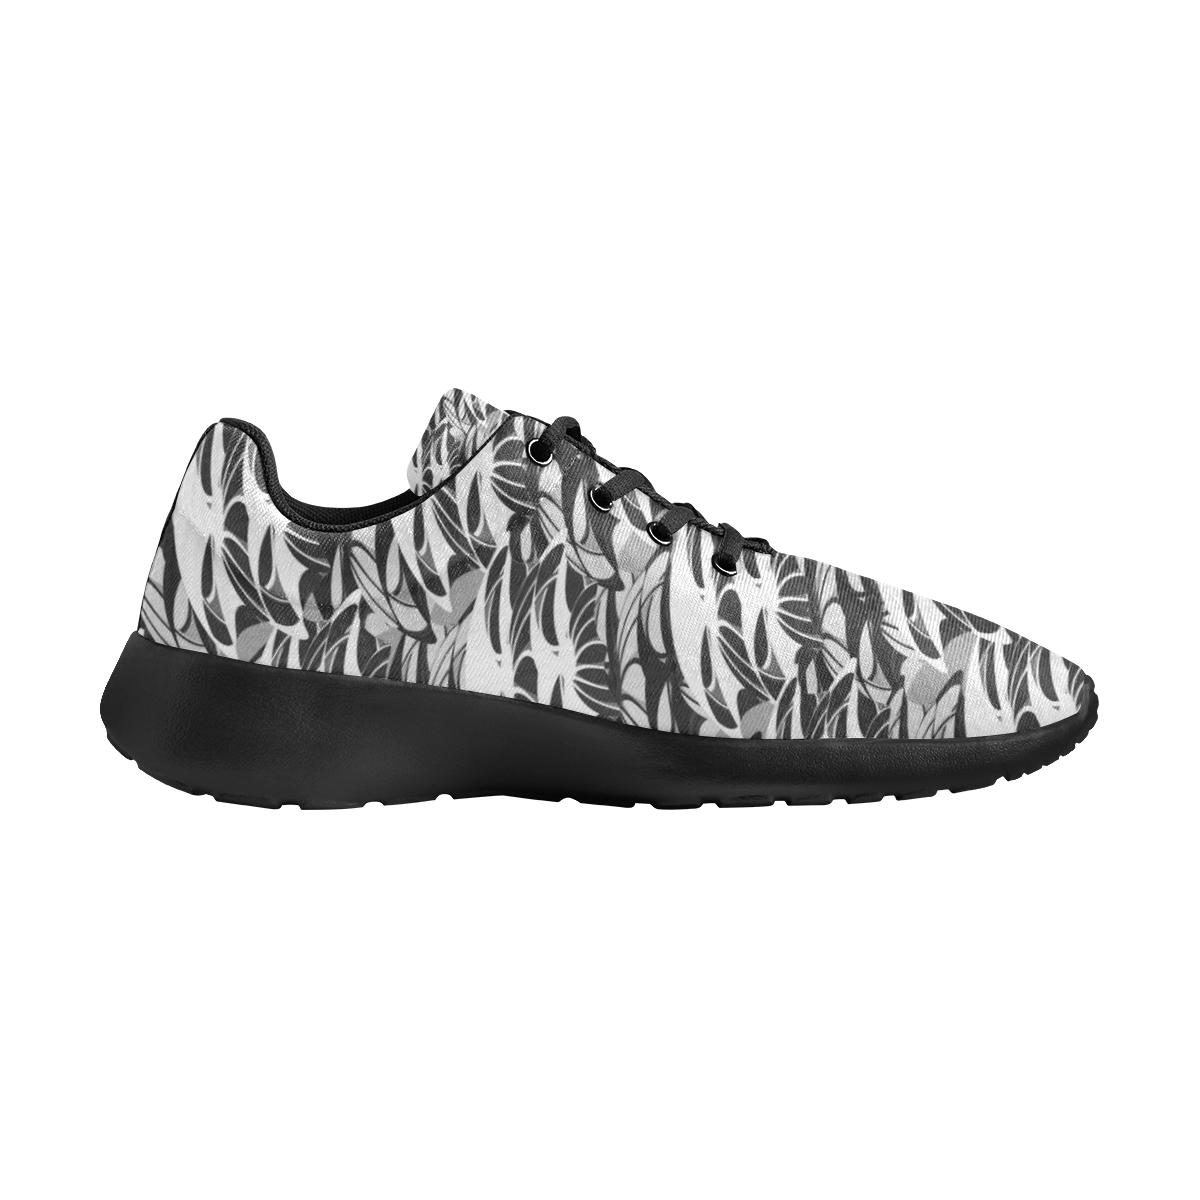 Alien Troops - Black & White (Black) Women's Athletic Shoes (Model 0200)